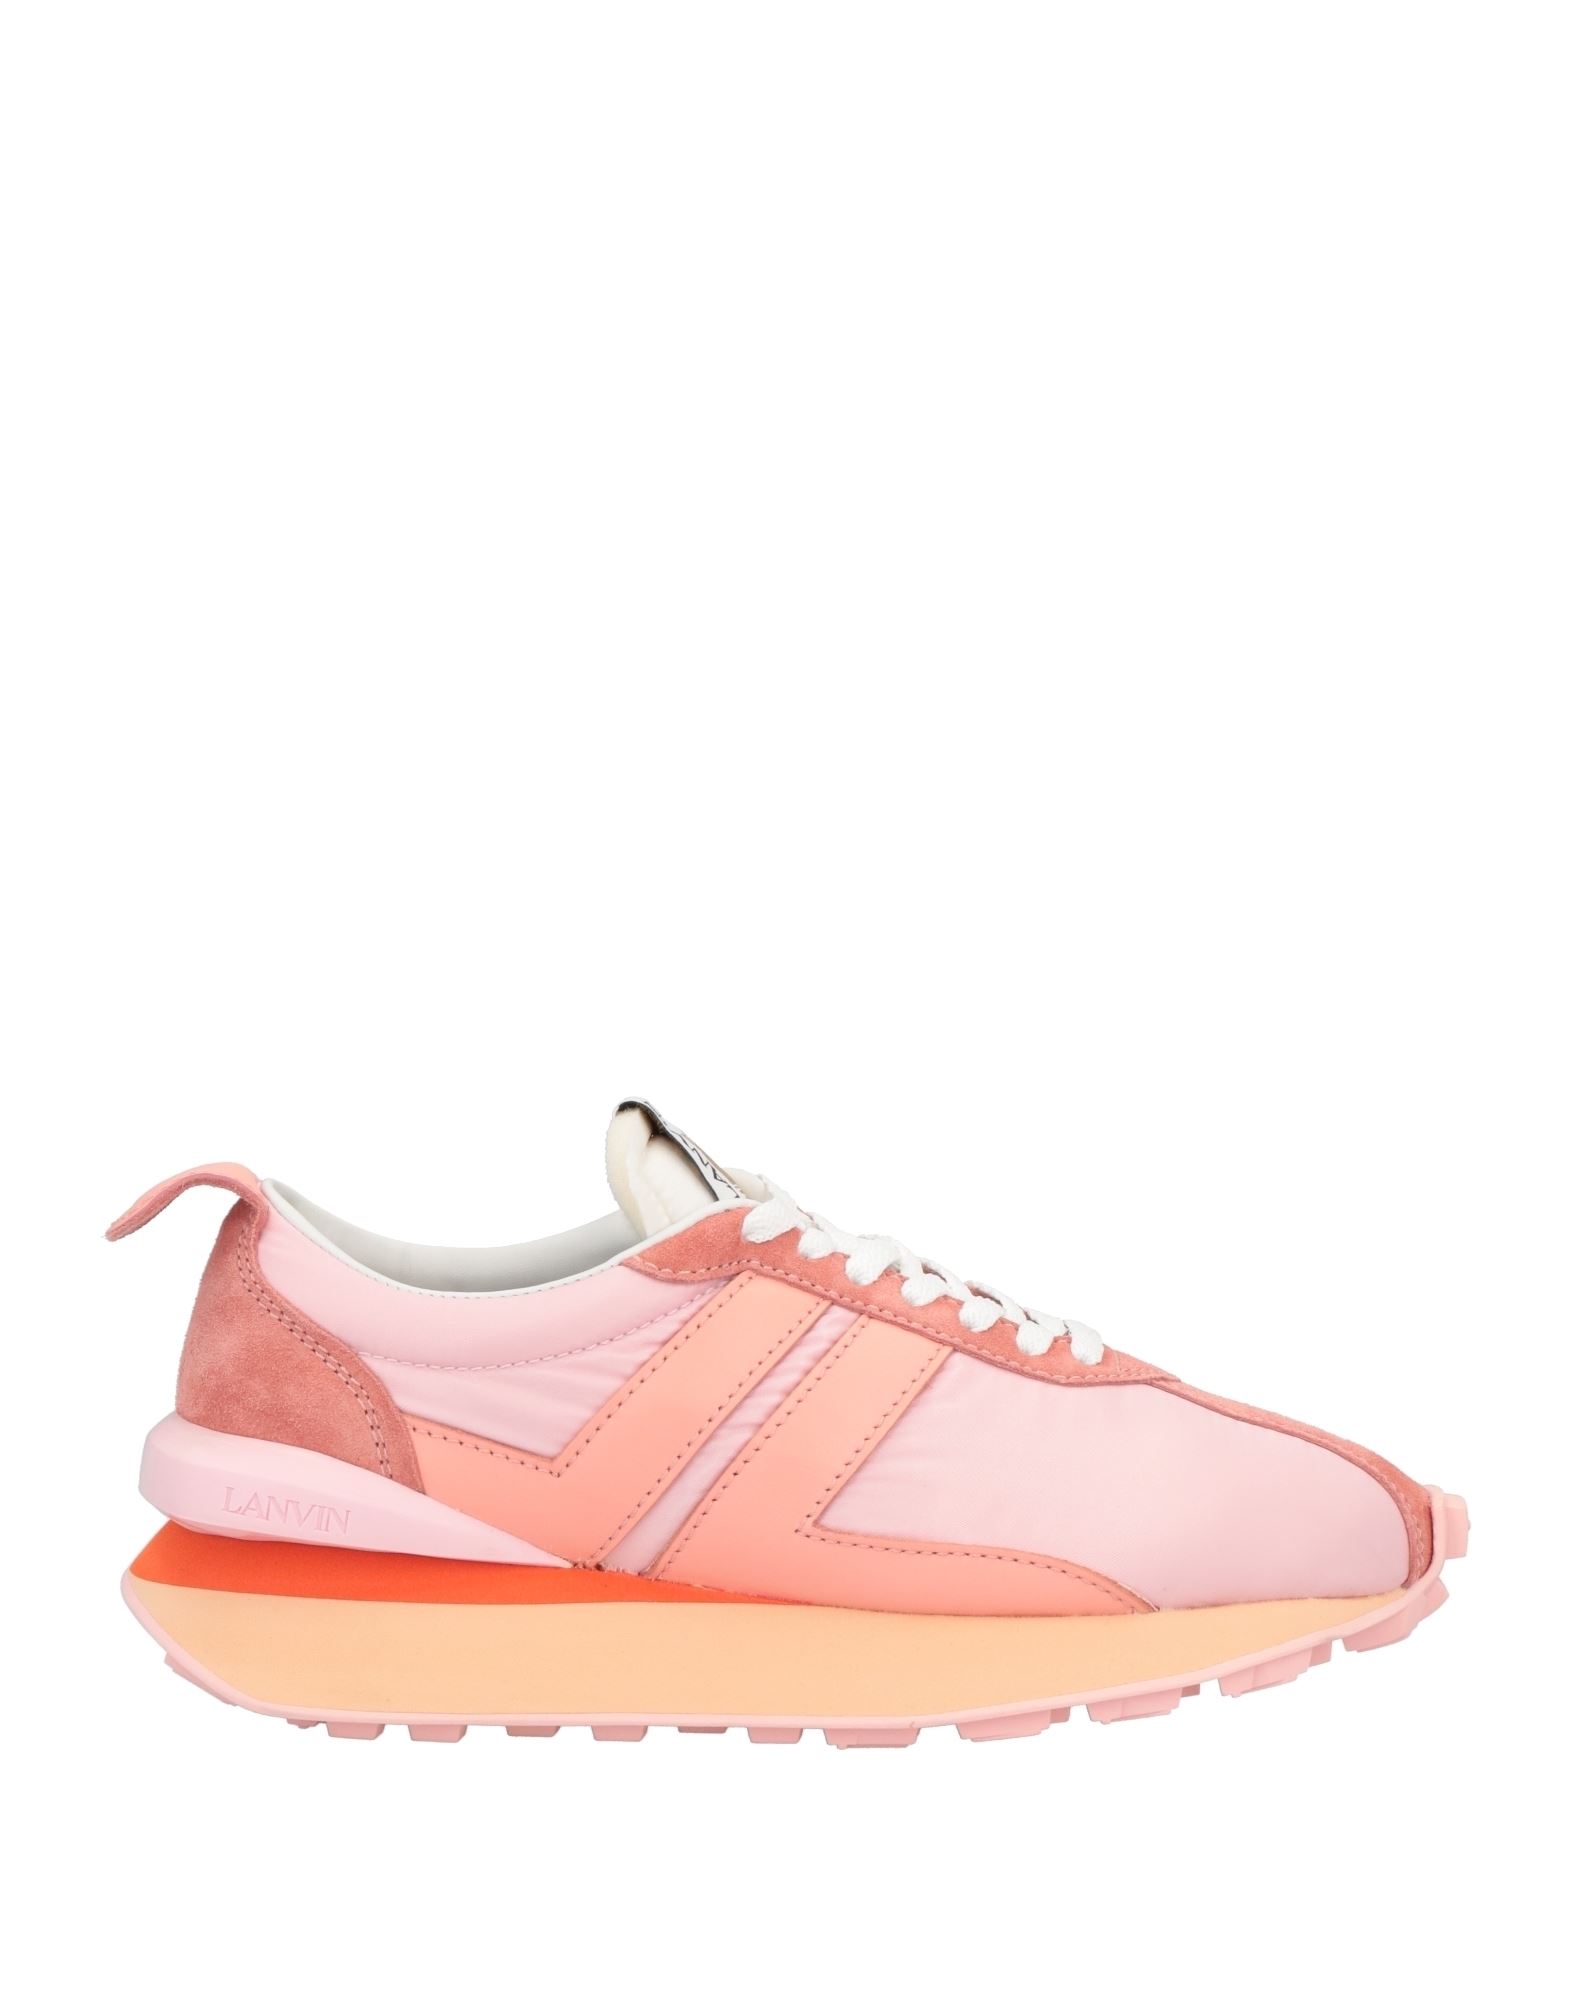 Lanvin Sneakers In Pink